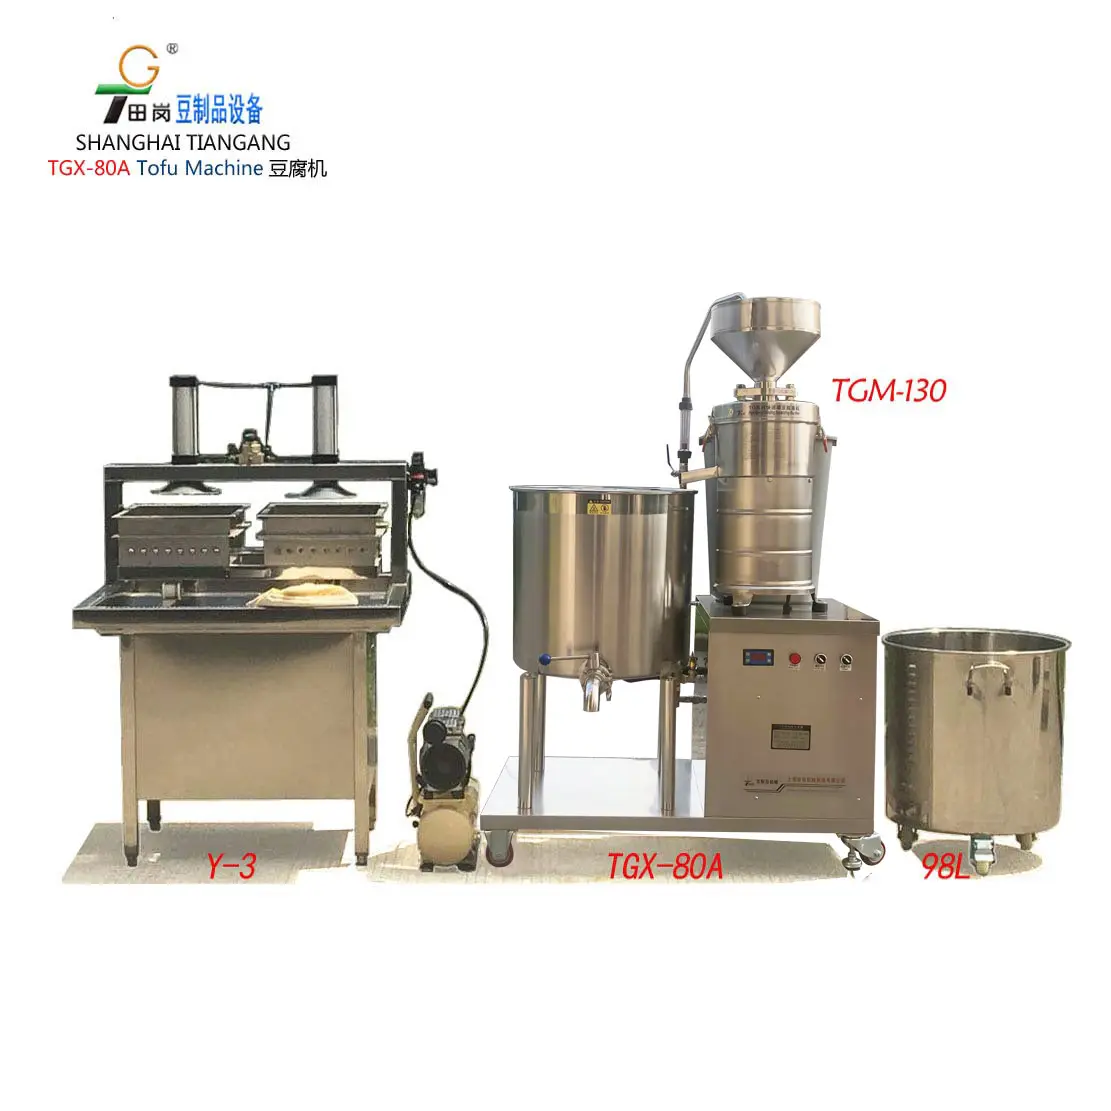 TGX-80A Tofu maschine/Soja milch maschine/Kleine tofu maker